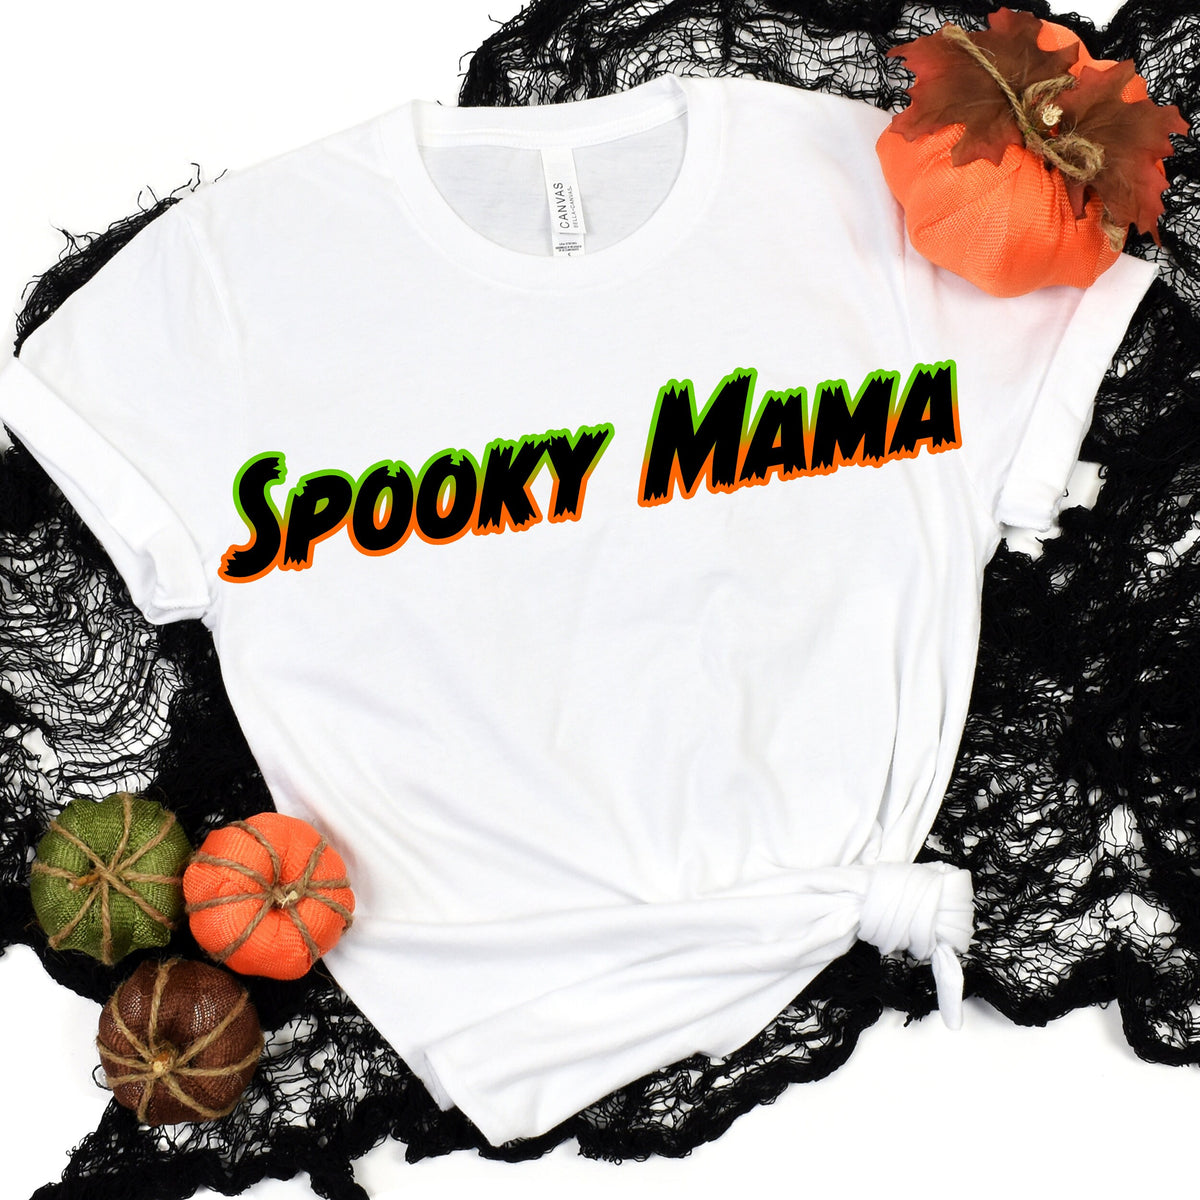 Spooky mama Sublimation designs - Png files - Halloween sublimation designs - Funny digital designs - T-shirt sublimation designs